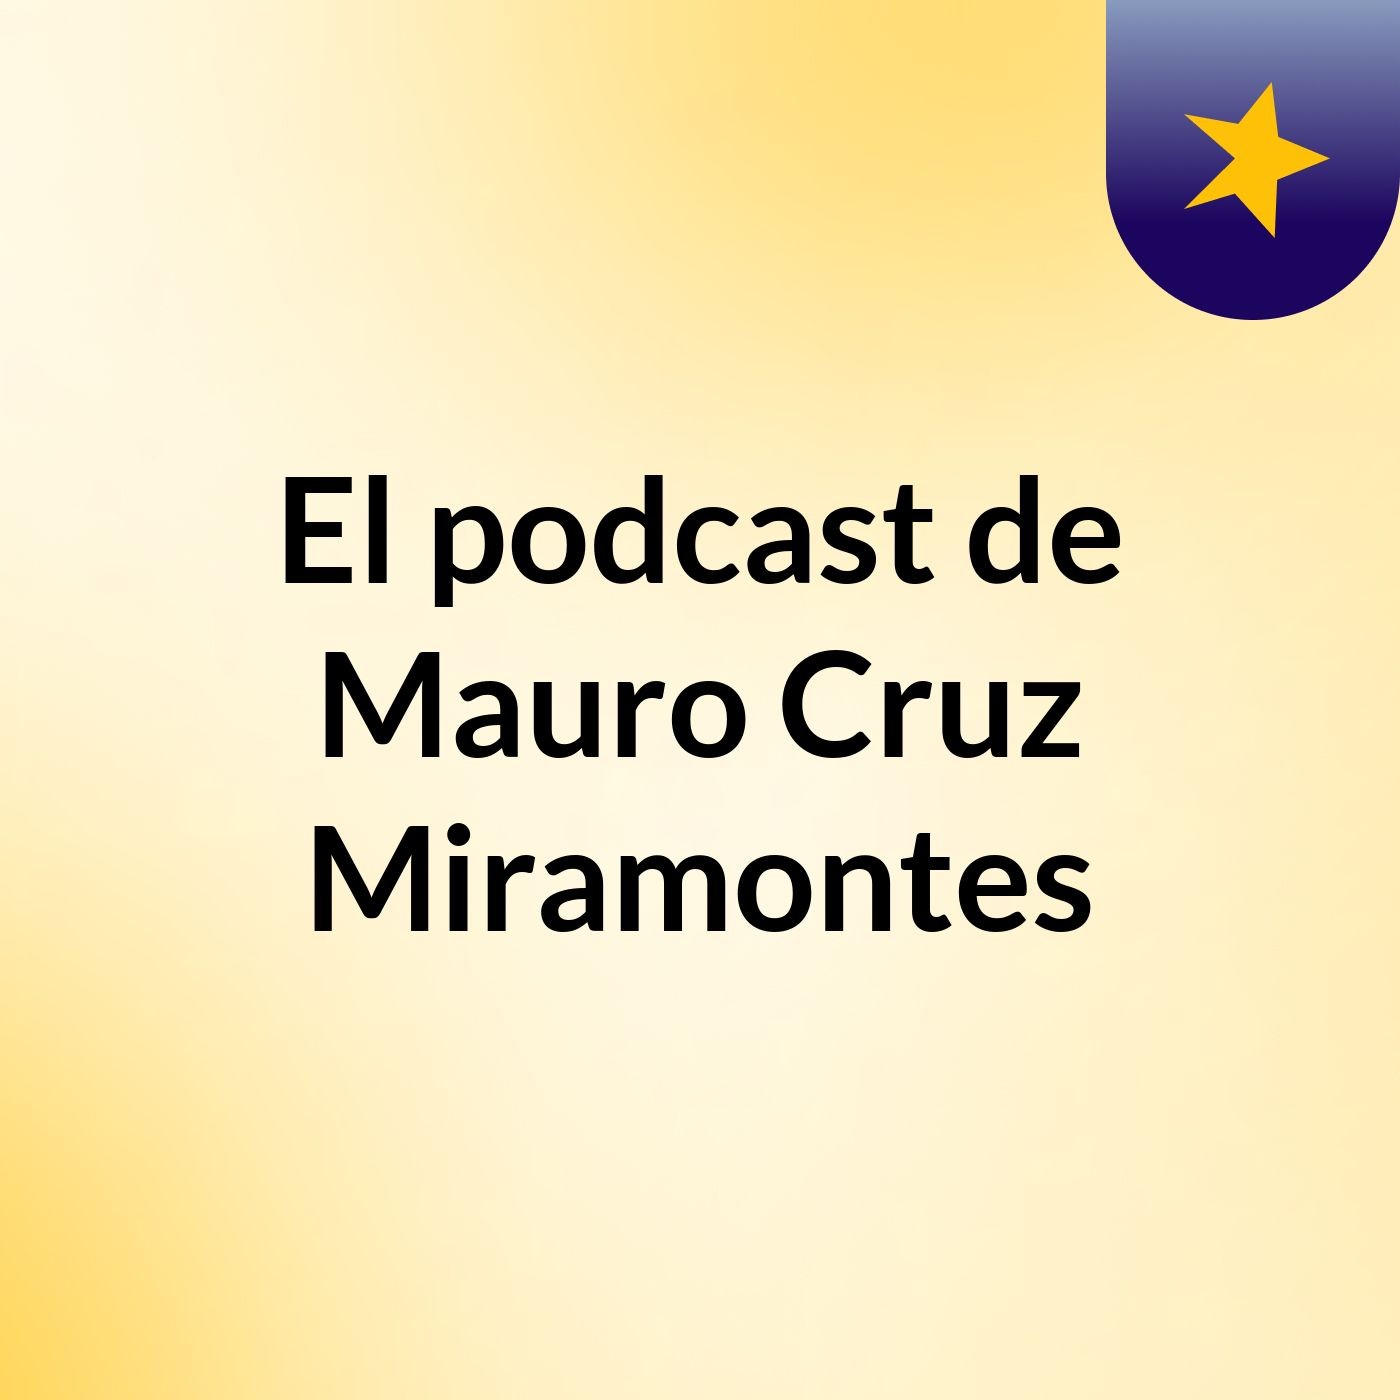 El podcast de Mauro Cruz Miramontes